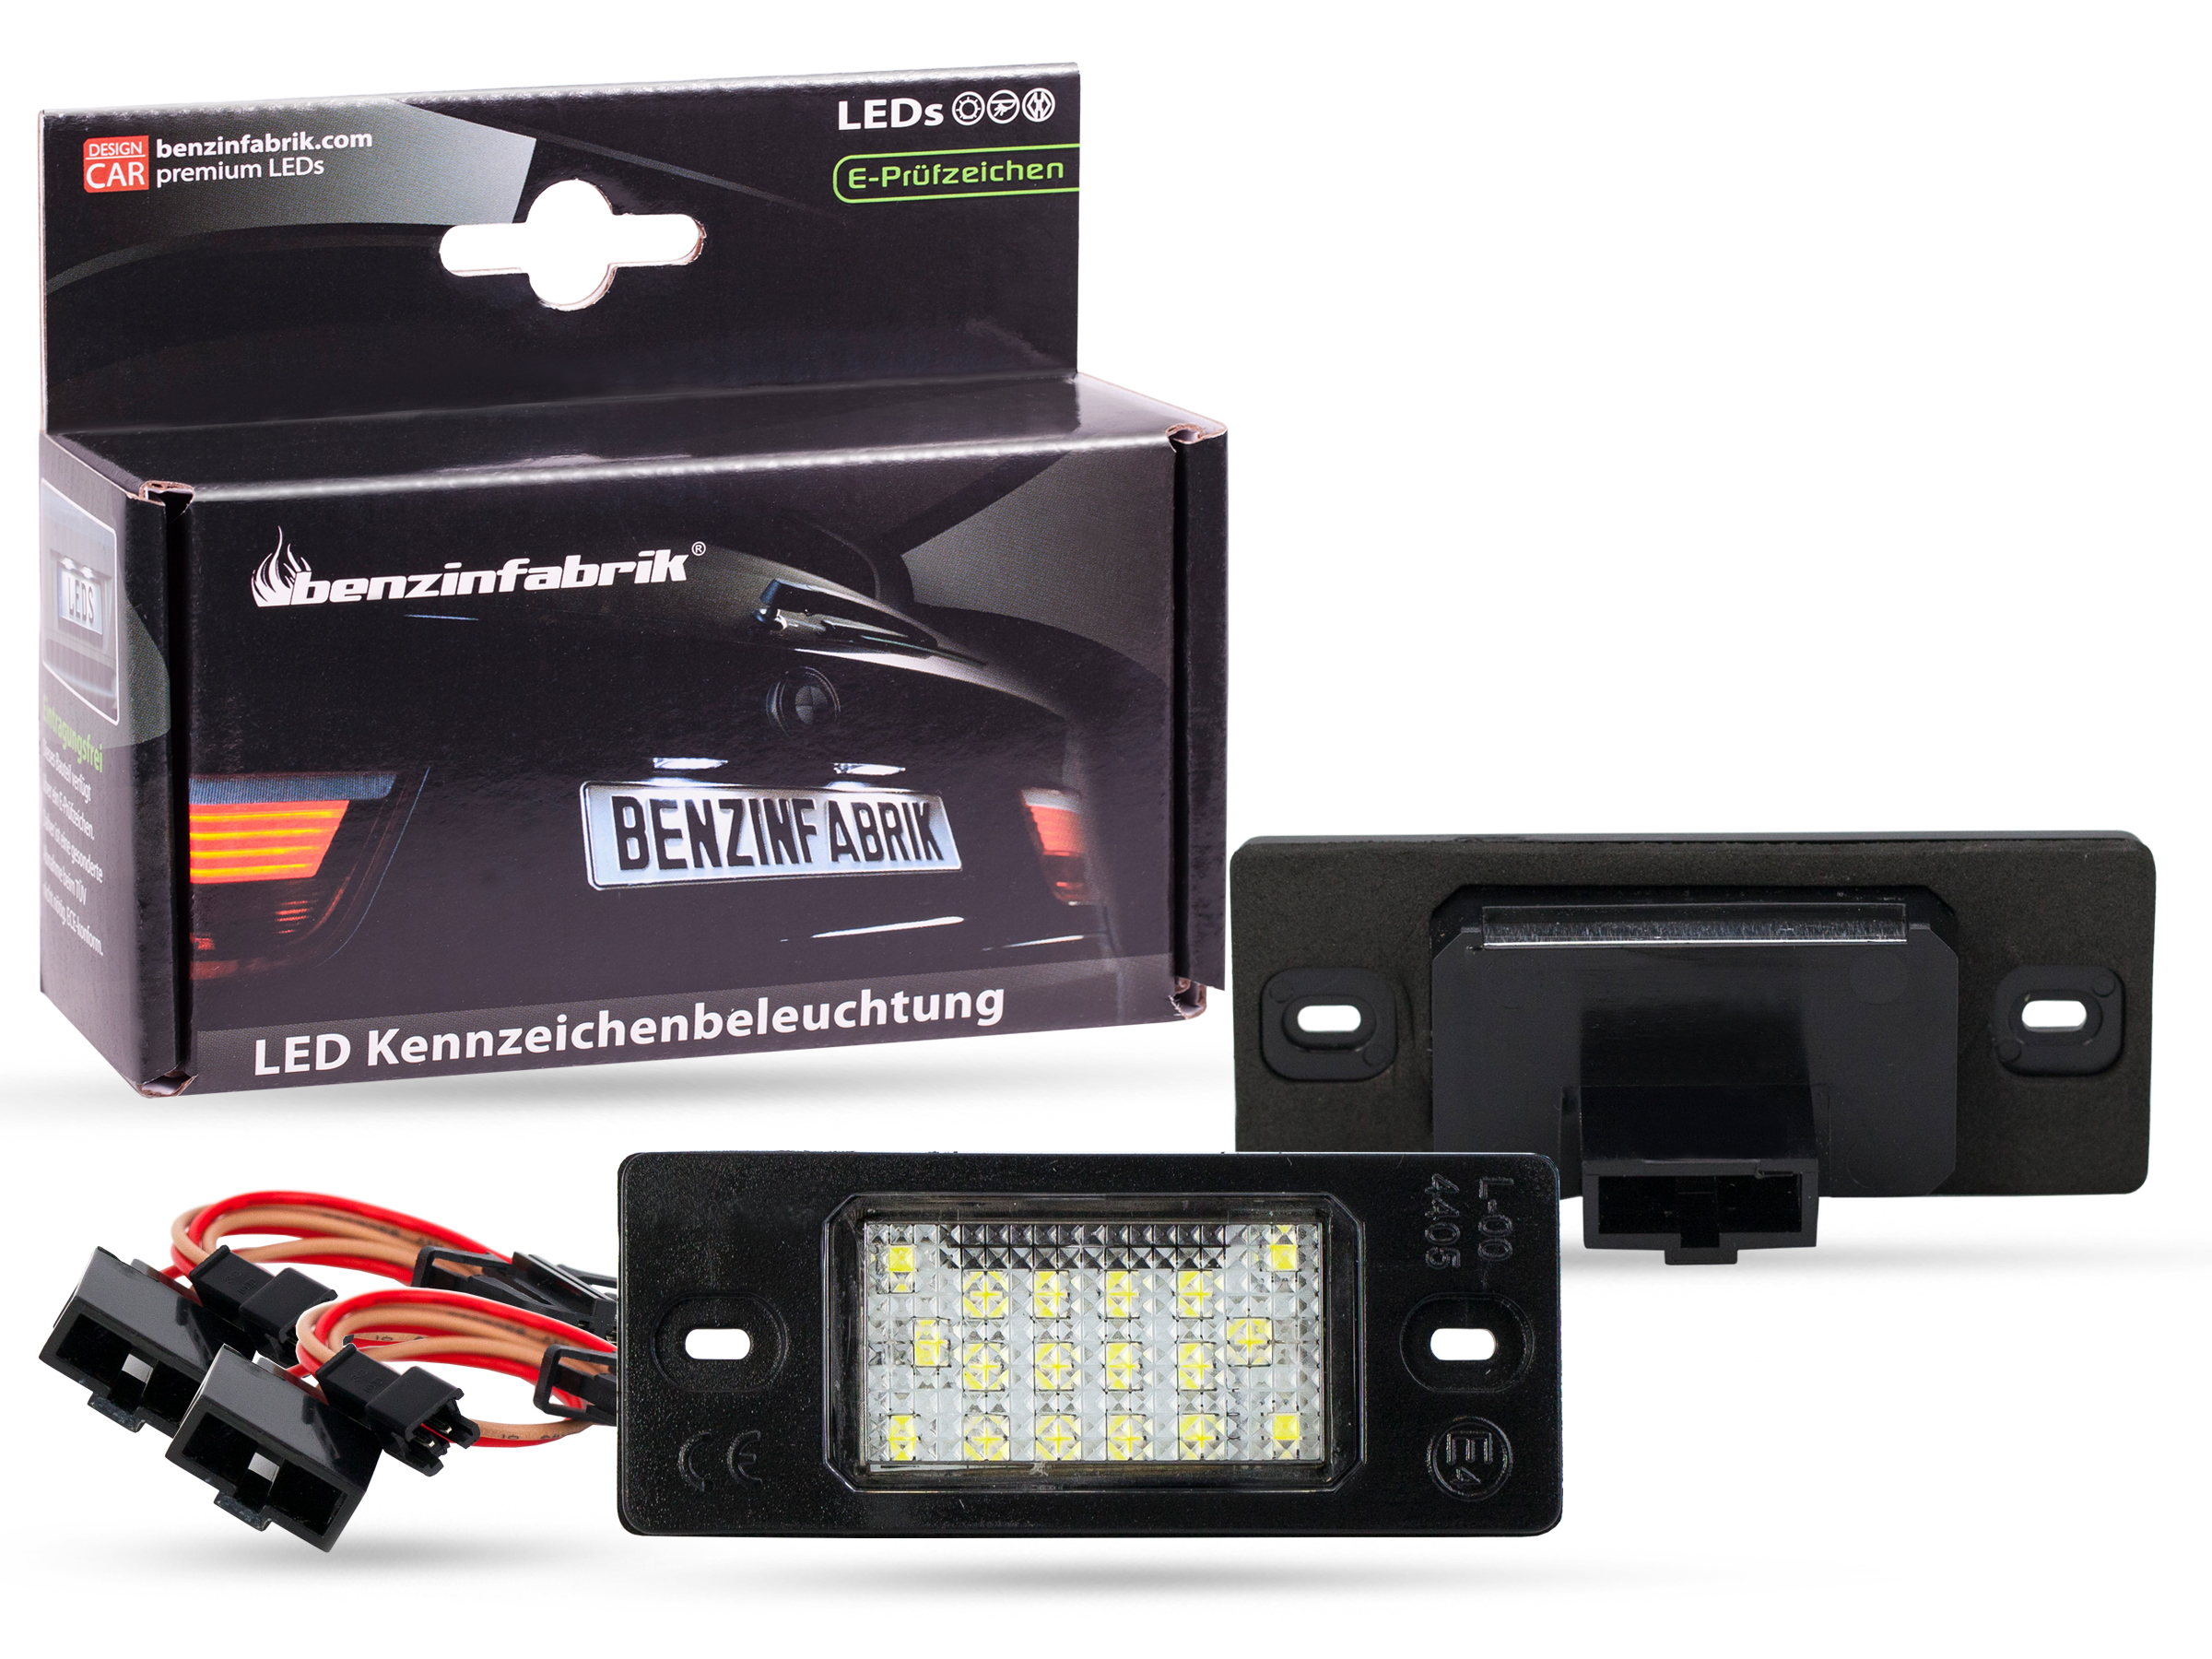 LED Kennzeichenbeleuchtung Module VW Touareg, mit E-Prüfzeichen, LED  Kennzeichenbeleuchtung für VW, LED Kennzeichenbeleuchtung